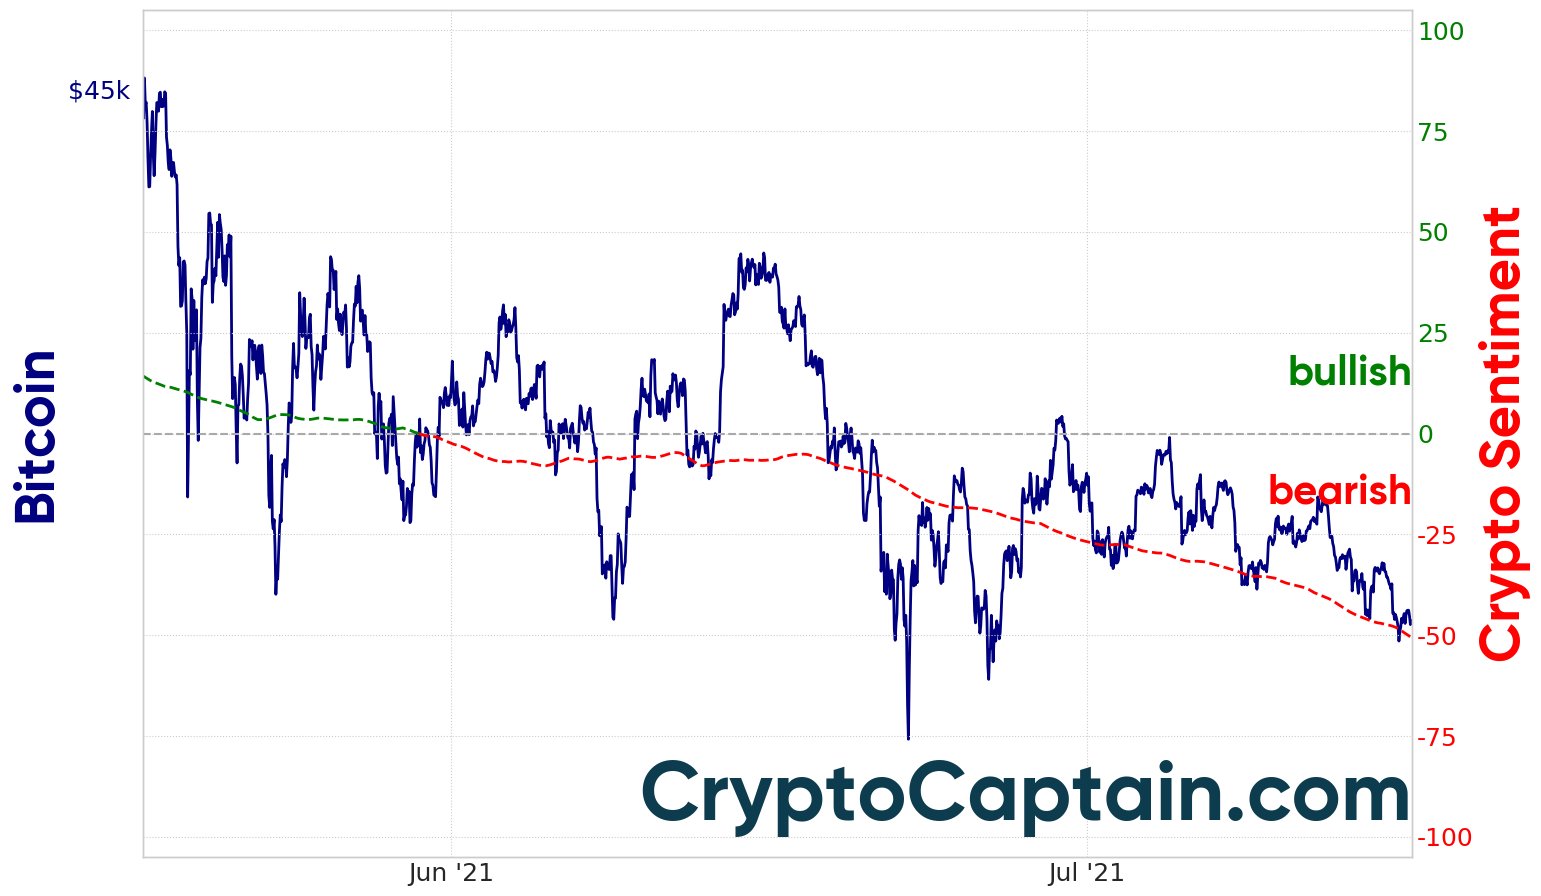 Market Sentiment Chart - CryptoCaptain